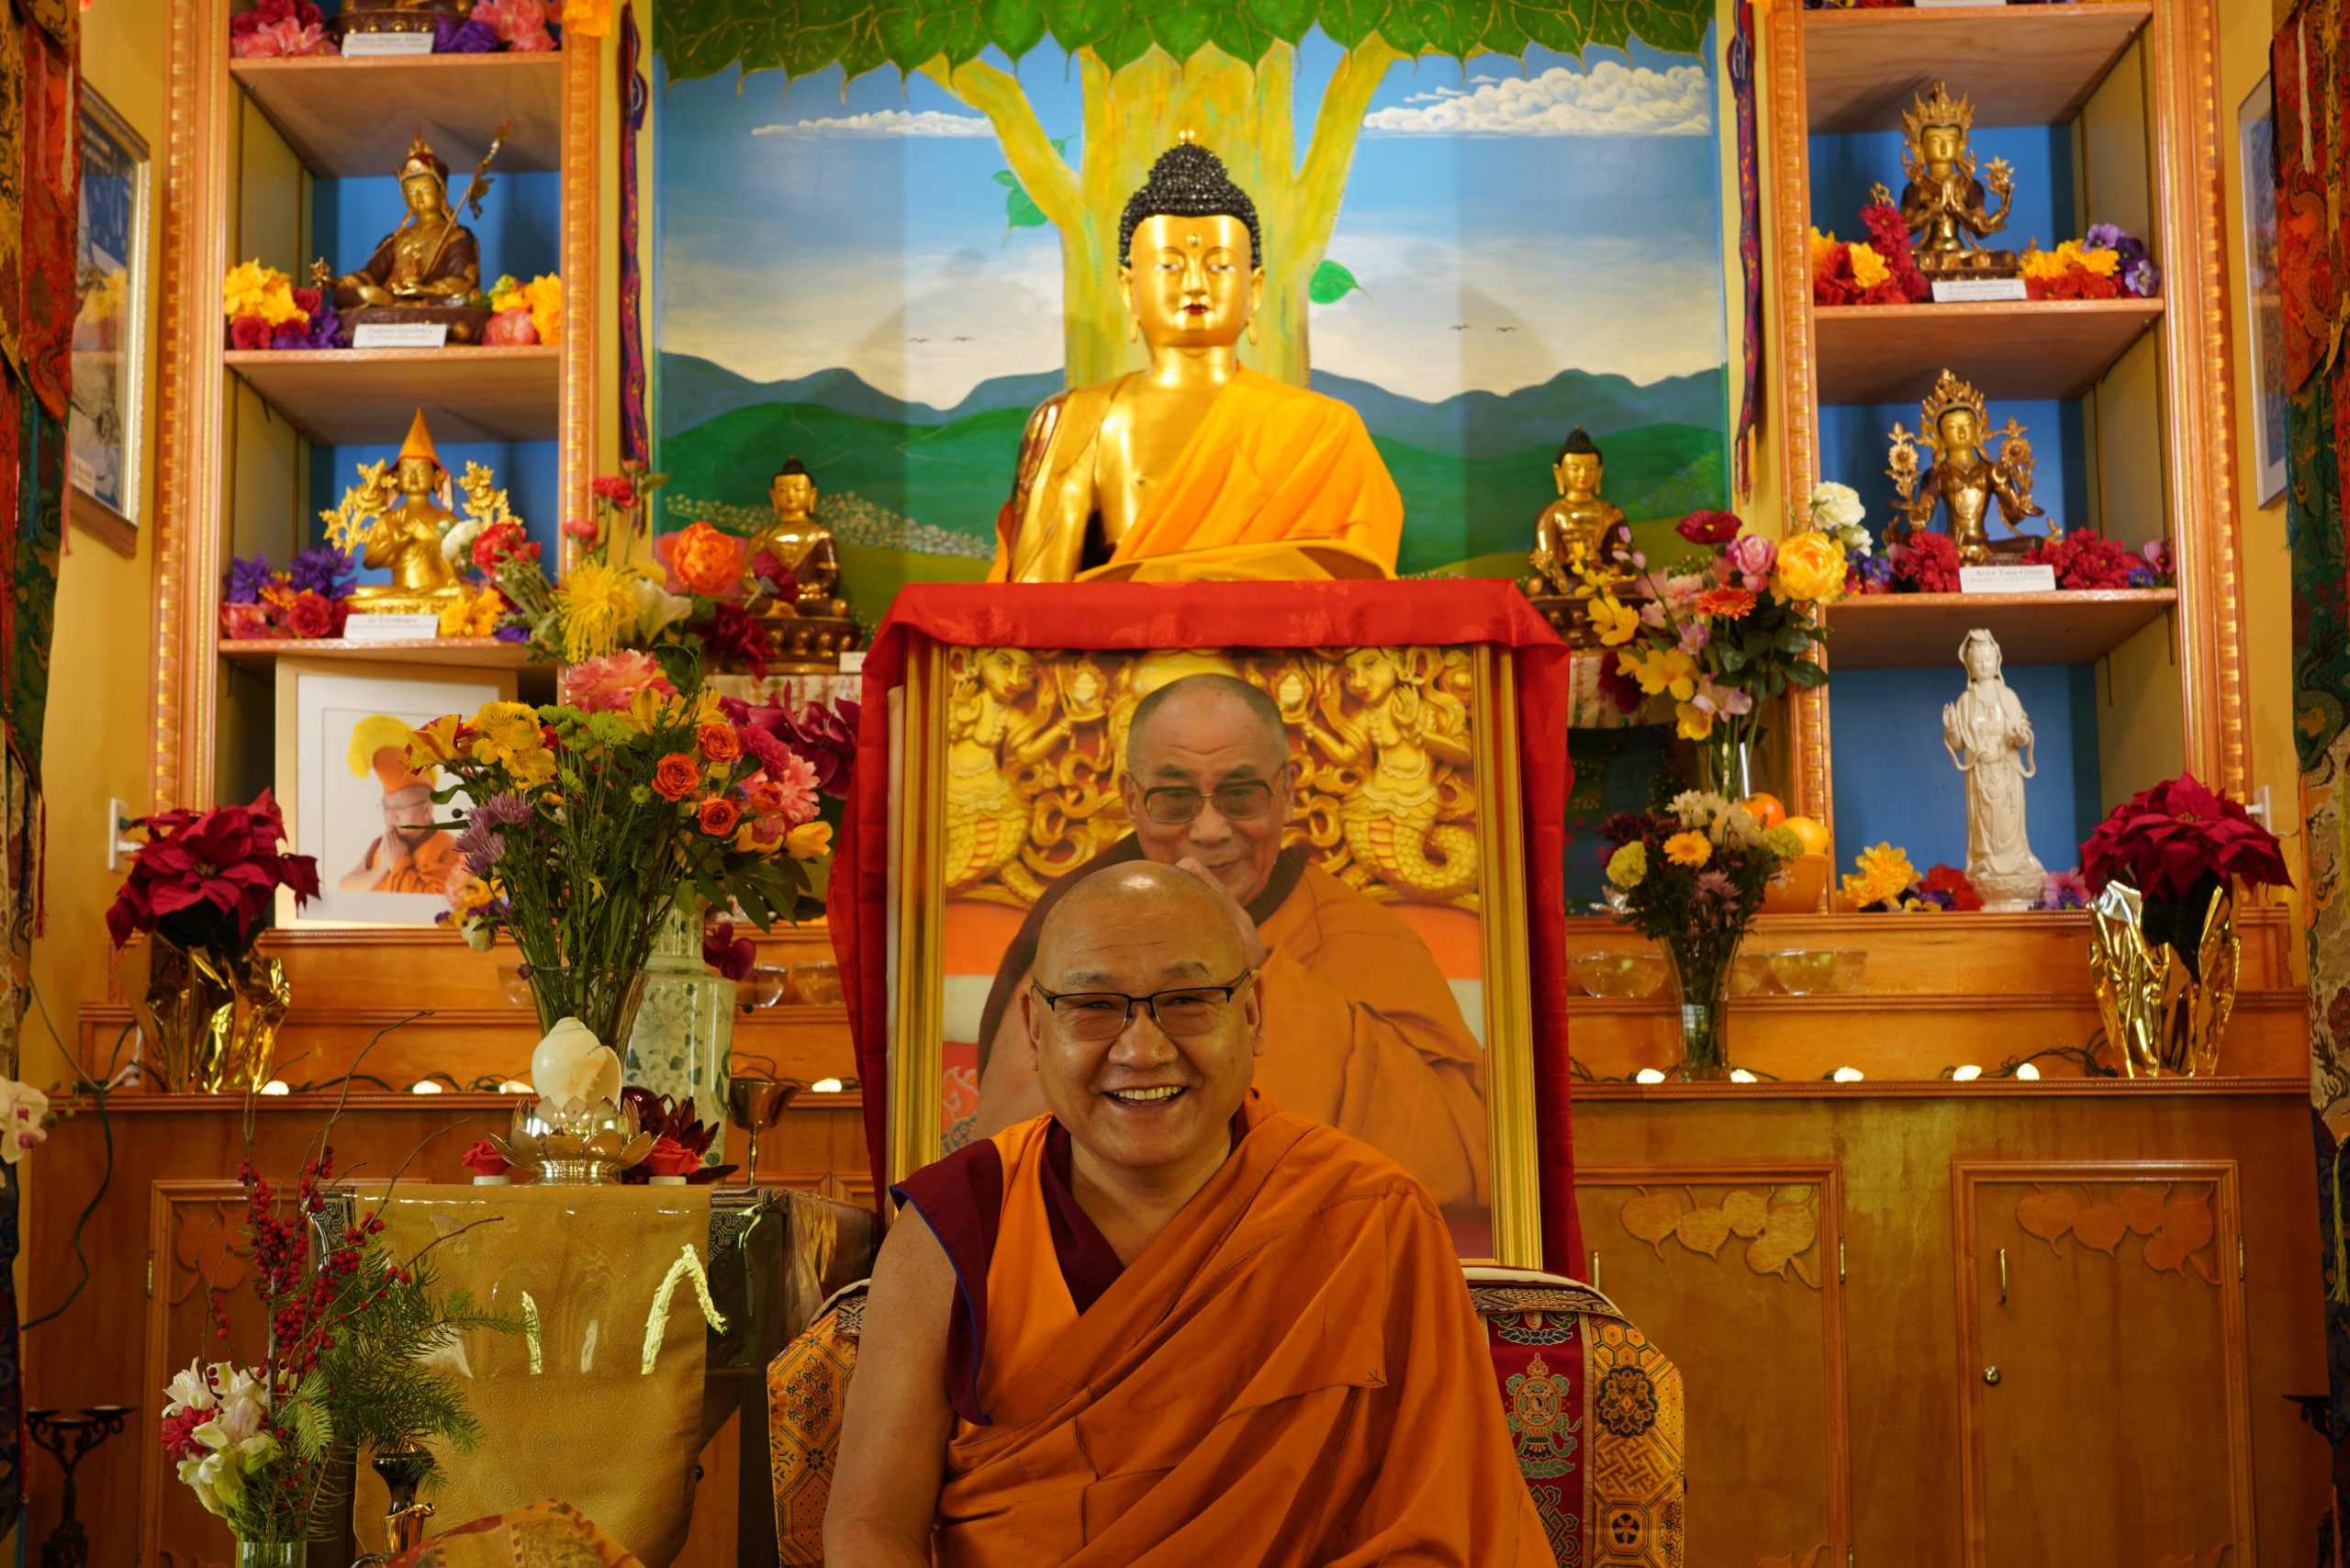 Geshe Phelgye teaching at the Buddhist Institute of Universal Compassion